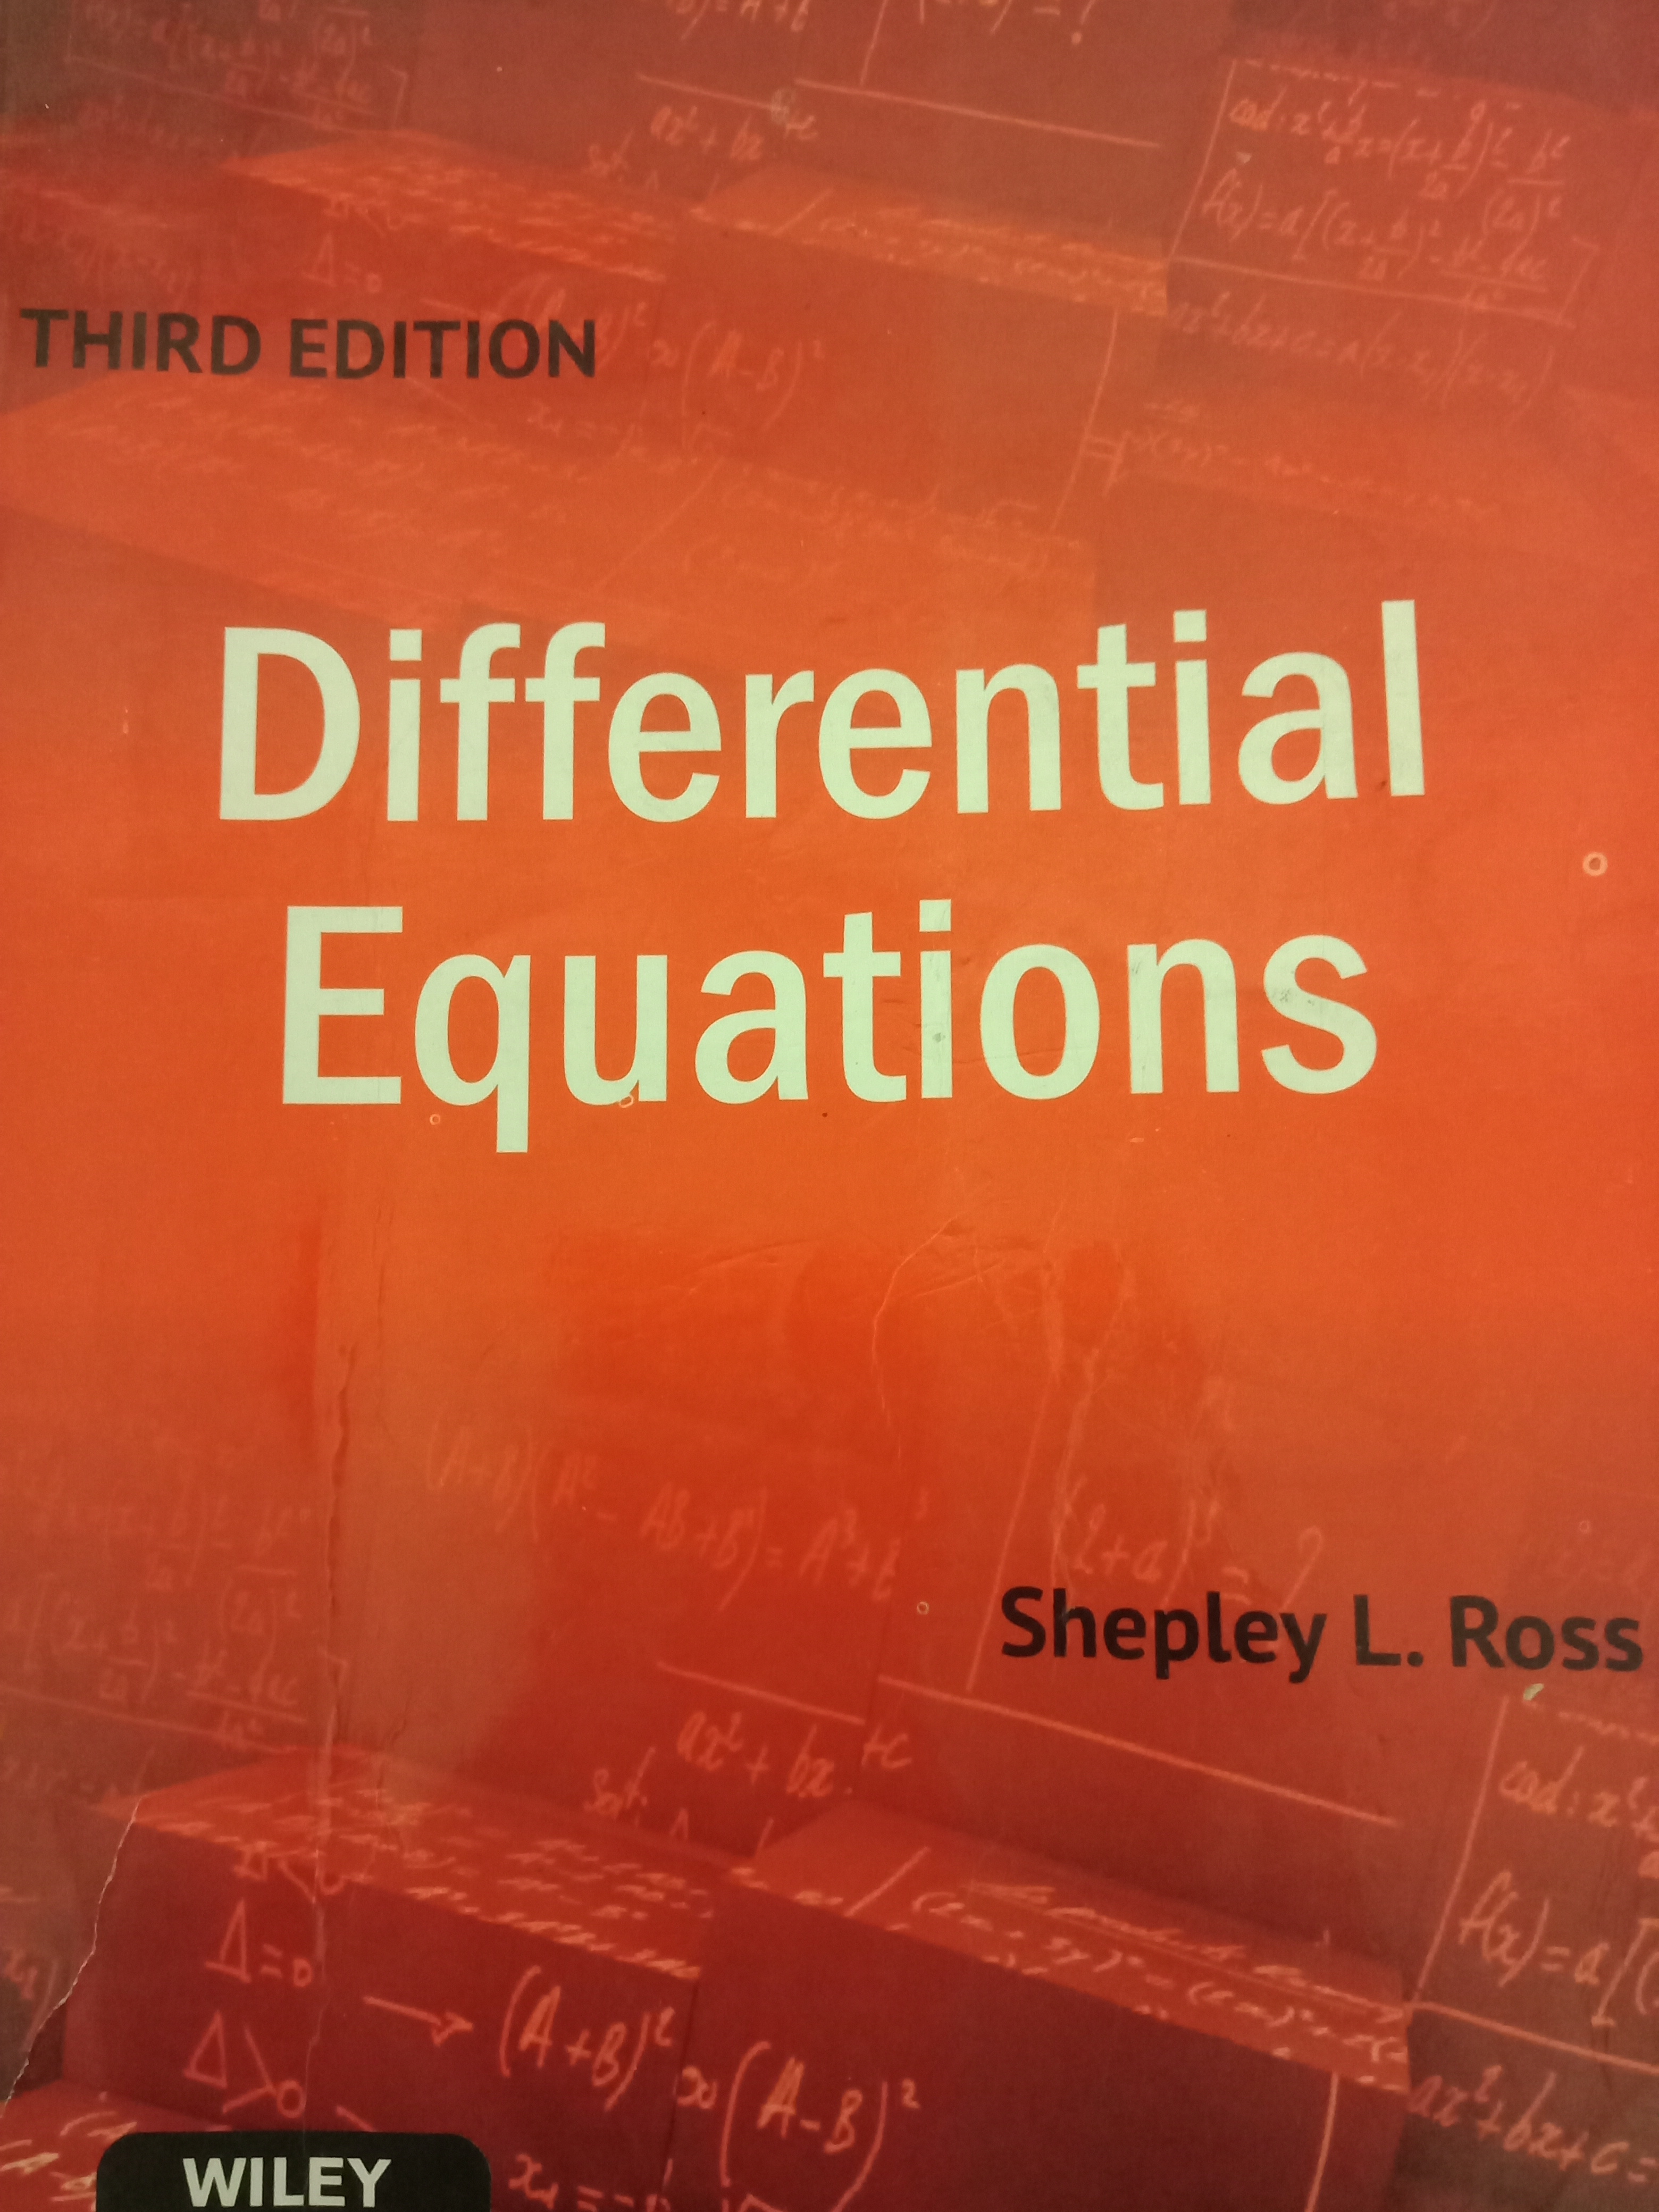 Differential Equation ,Trigonometry and Matrices